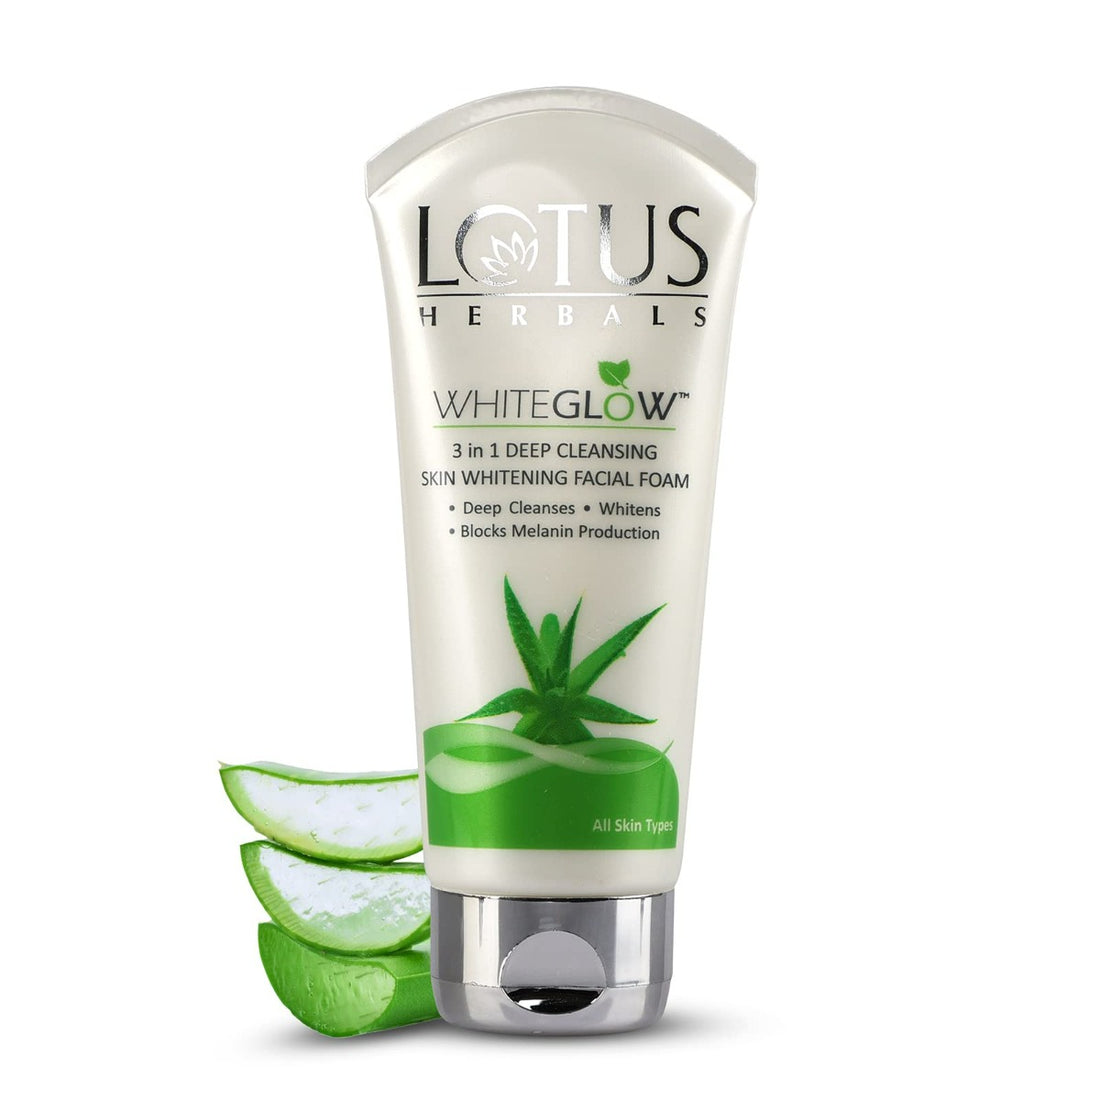 Lotus Herbals Whiteglow 3 In 1 Deep Cleansing Skin Whitening Facial Foam